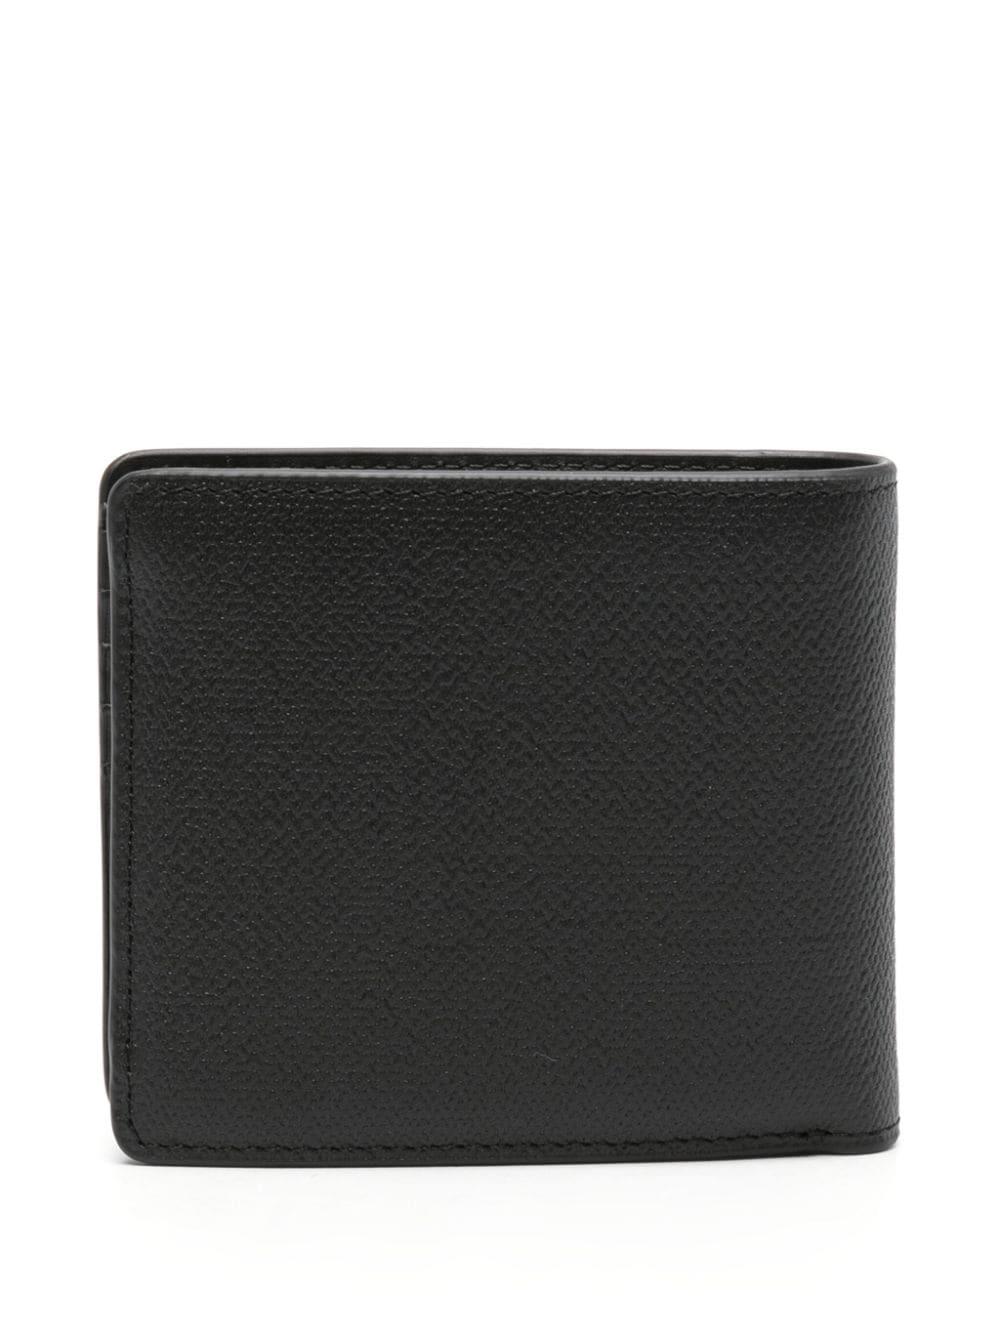 Diesel Touchture 1DR bi-fold wallet - Black